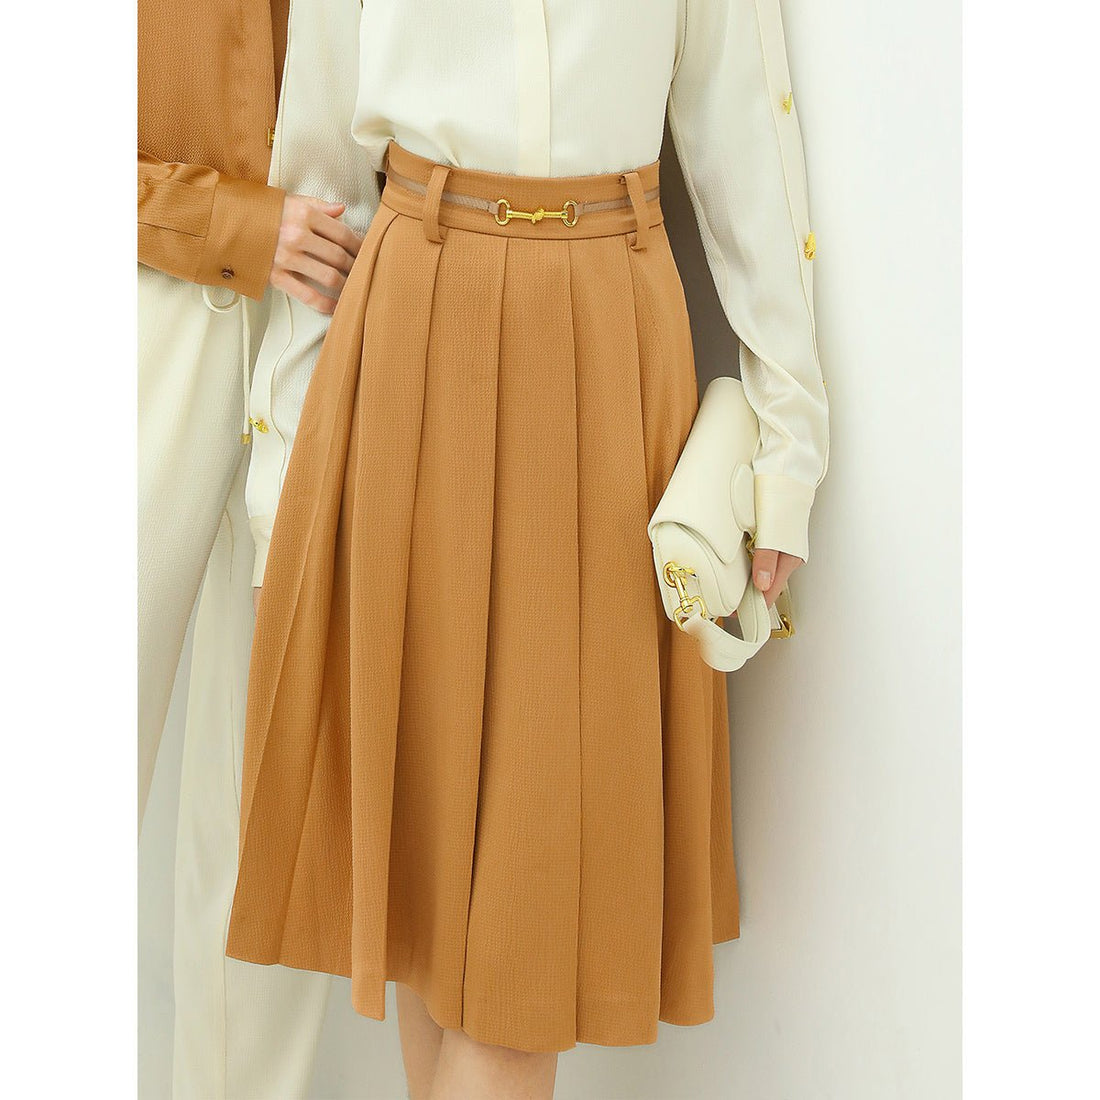 High Waist Chain Deco Pleat Brown Skirt